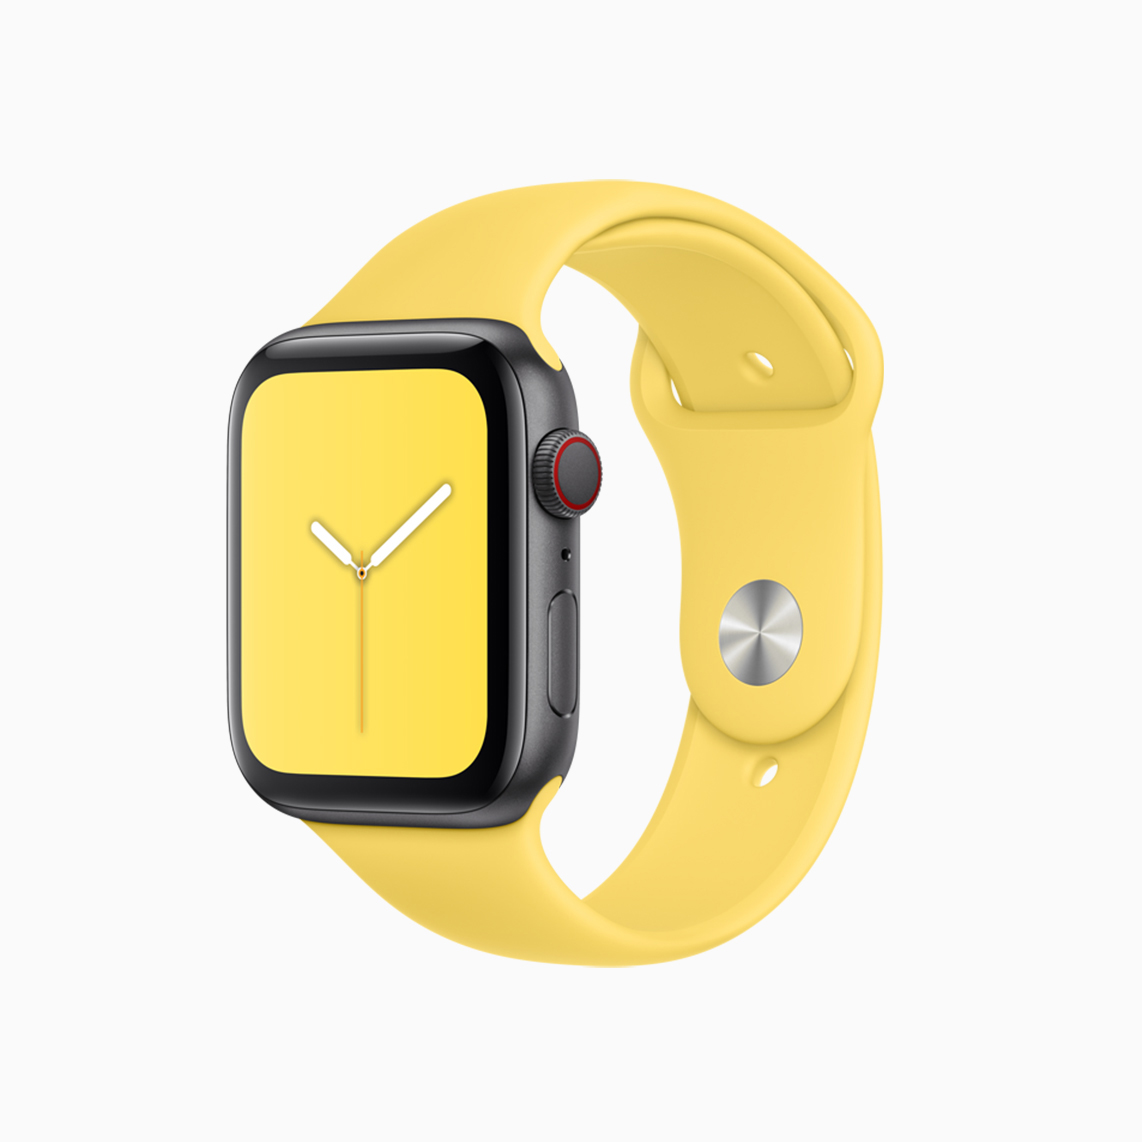 Apple Debuts watchOS 6 for Apple Watch